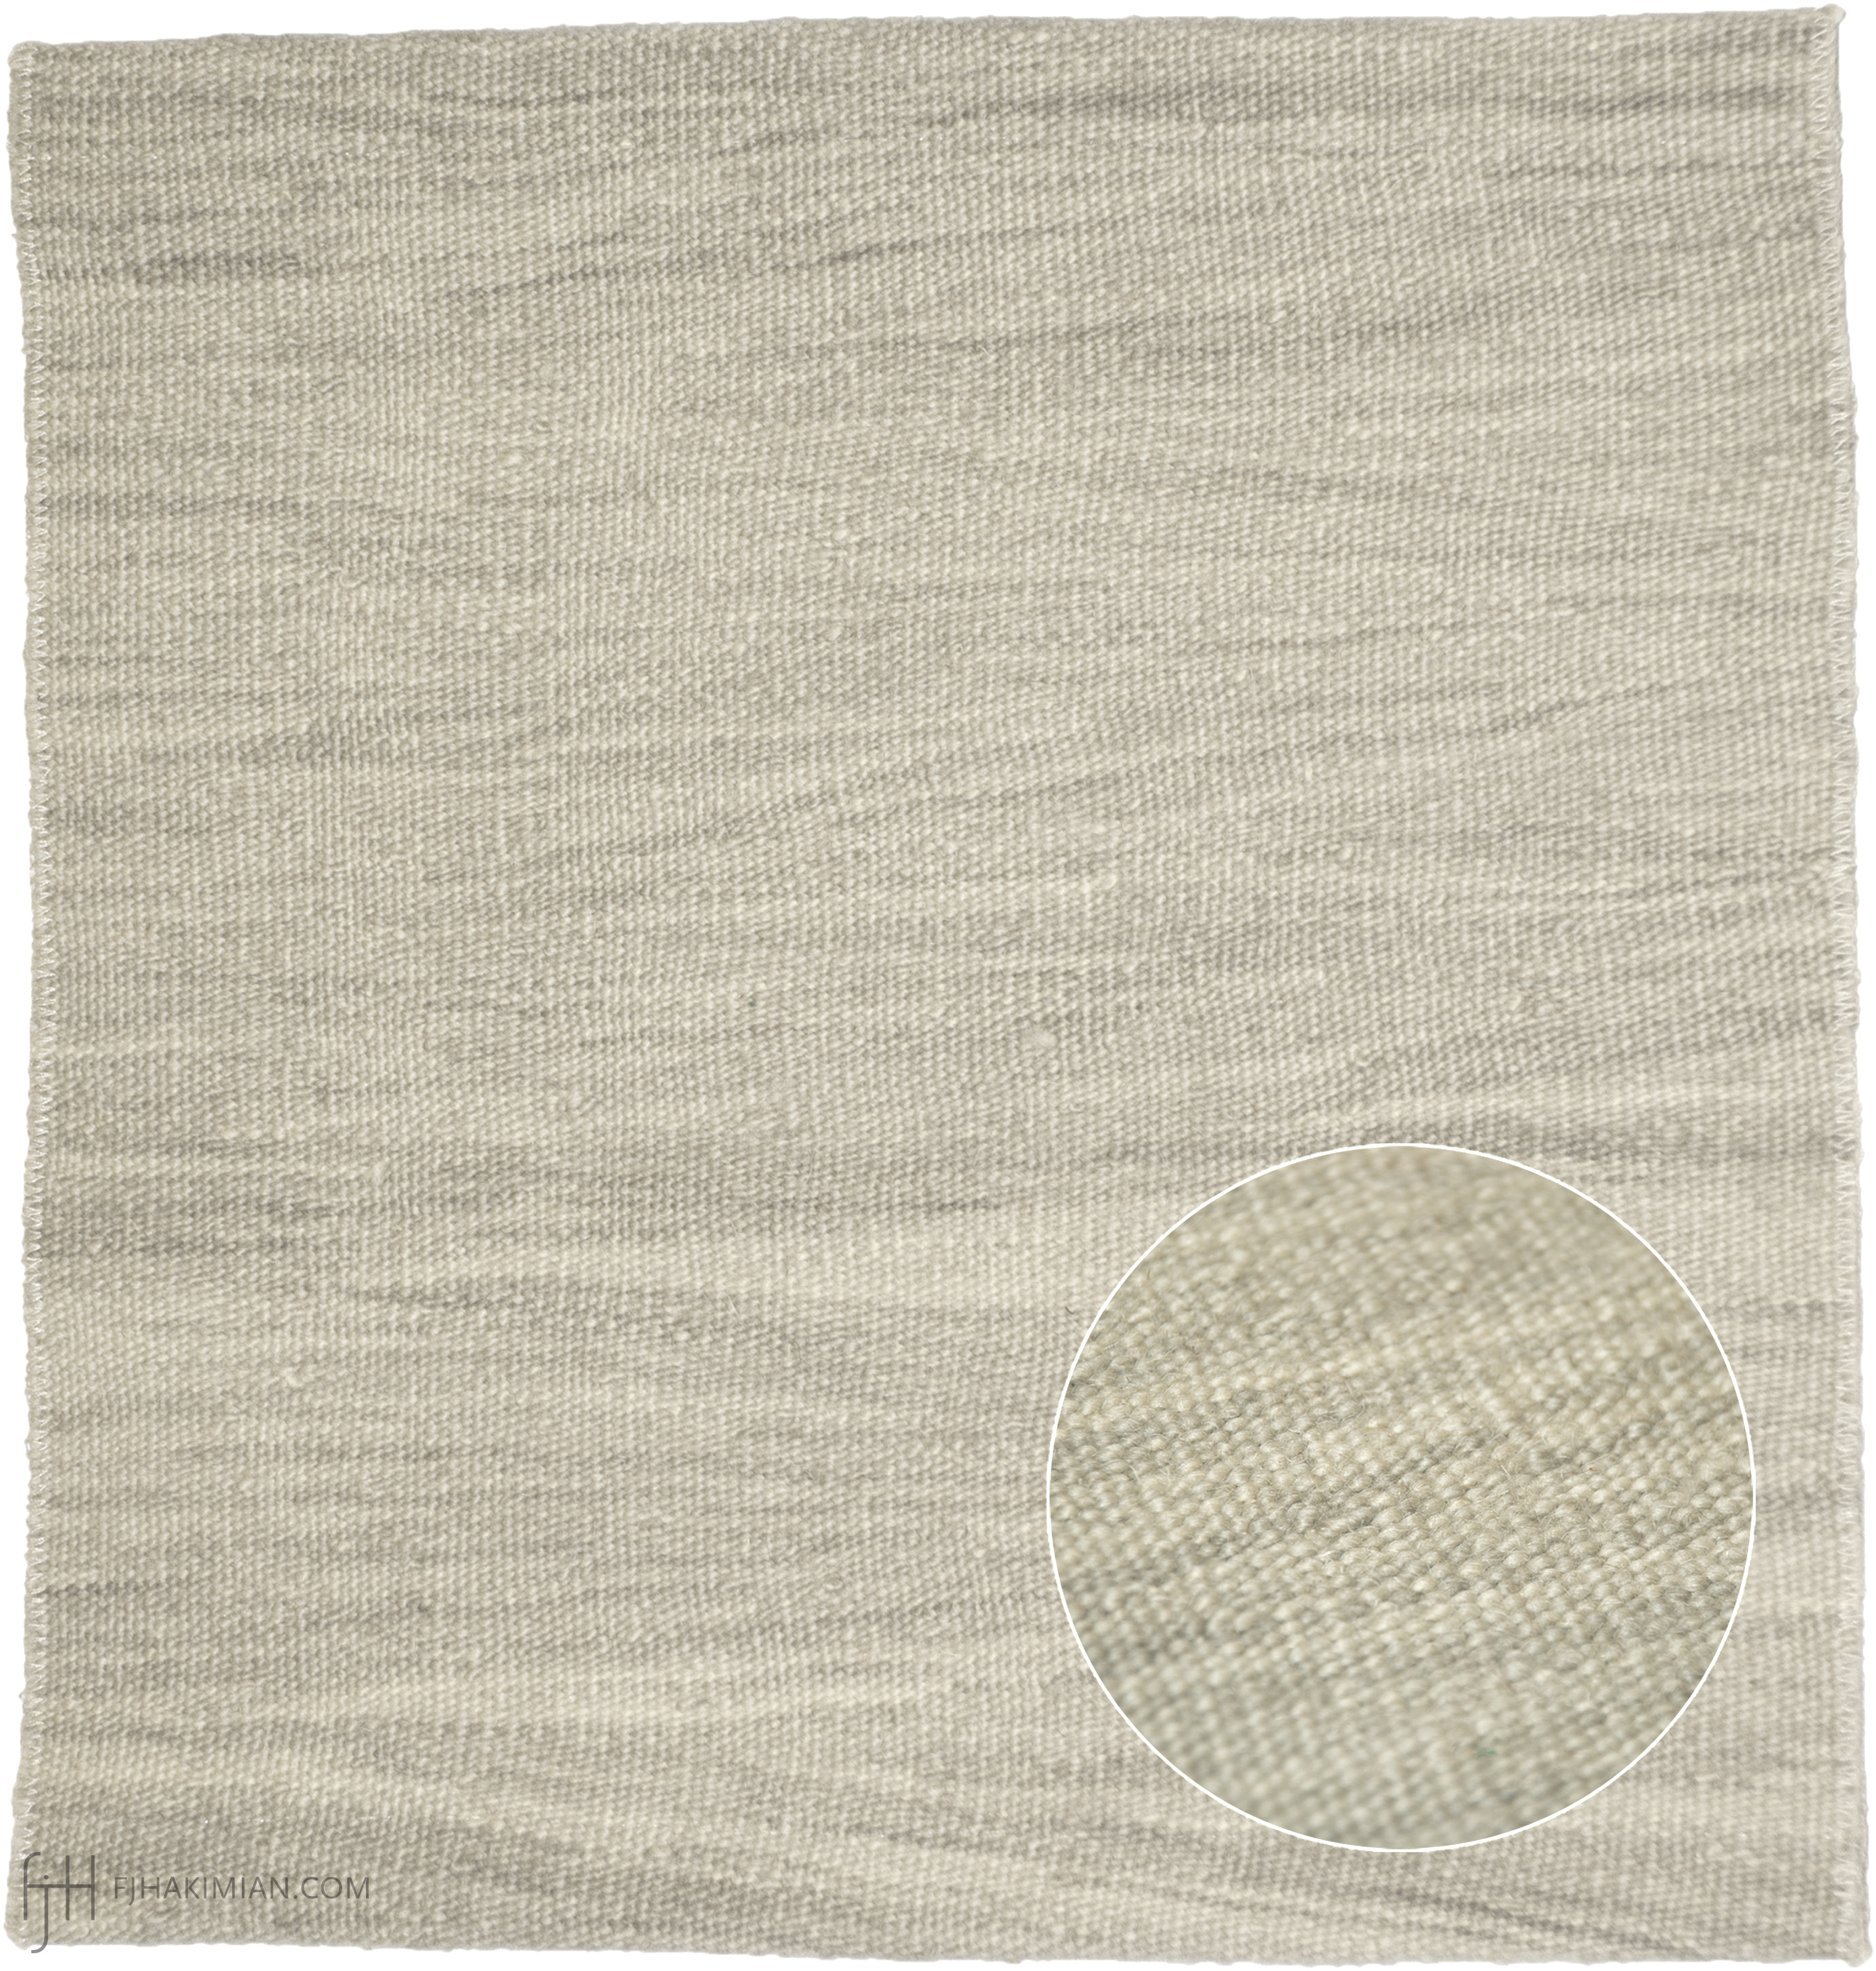 47908 | KK-Flat Weave | Custom Sustainable Carpet | FJ Hakimian | Carpet Gallery in NYC